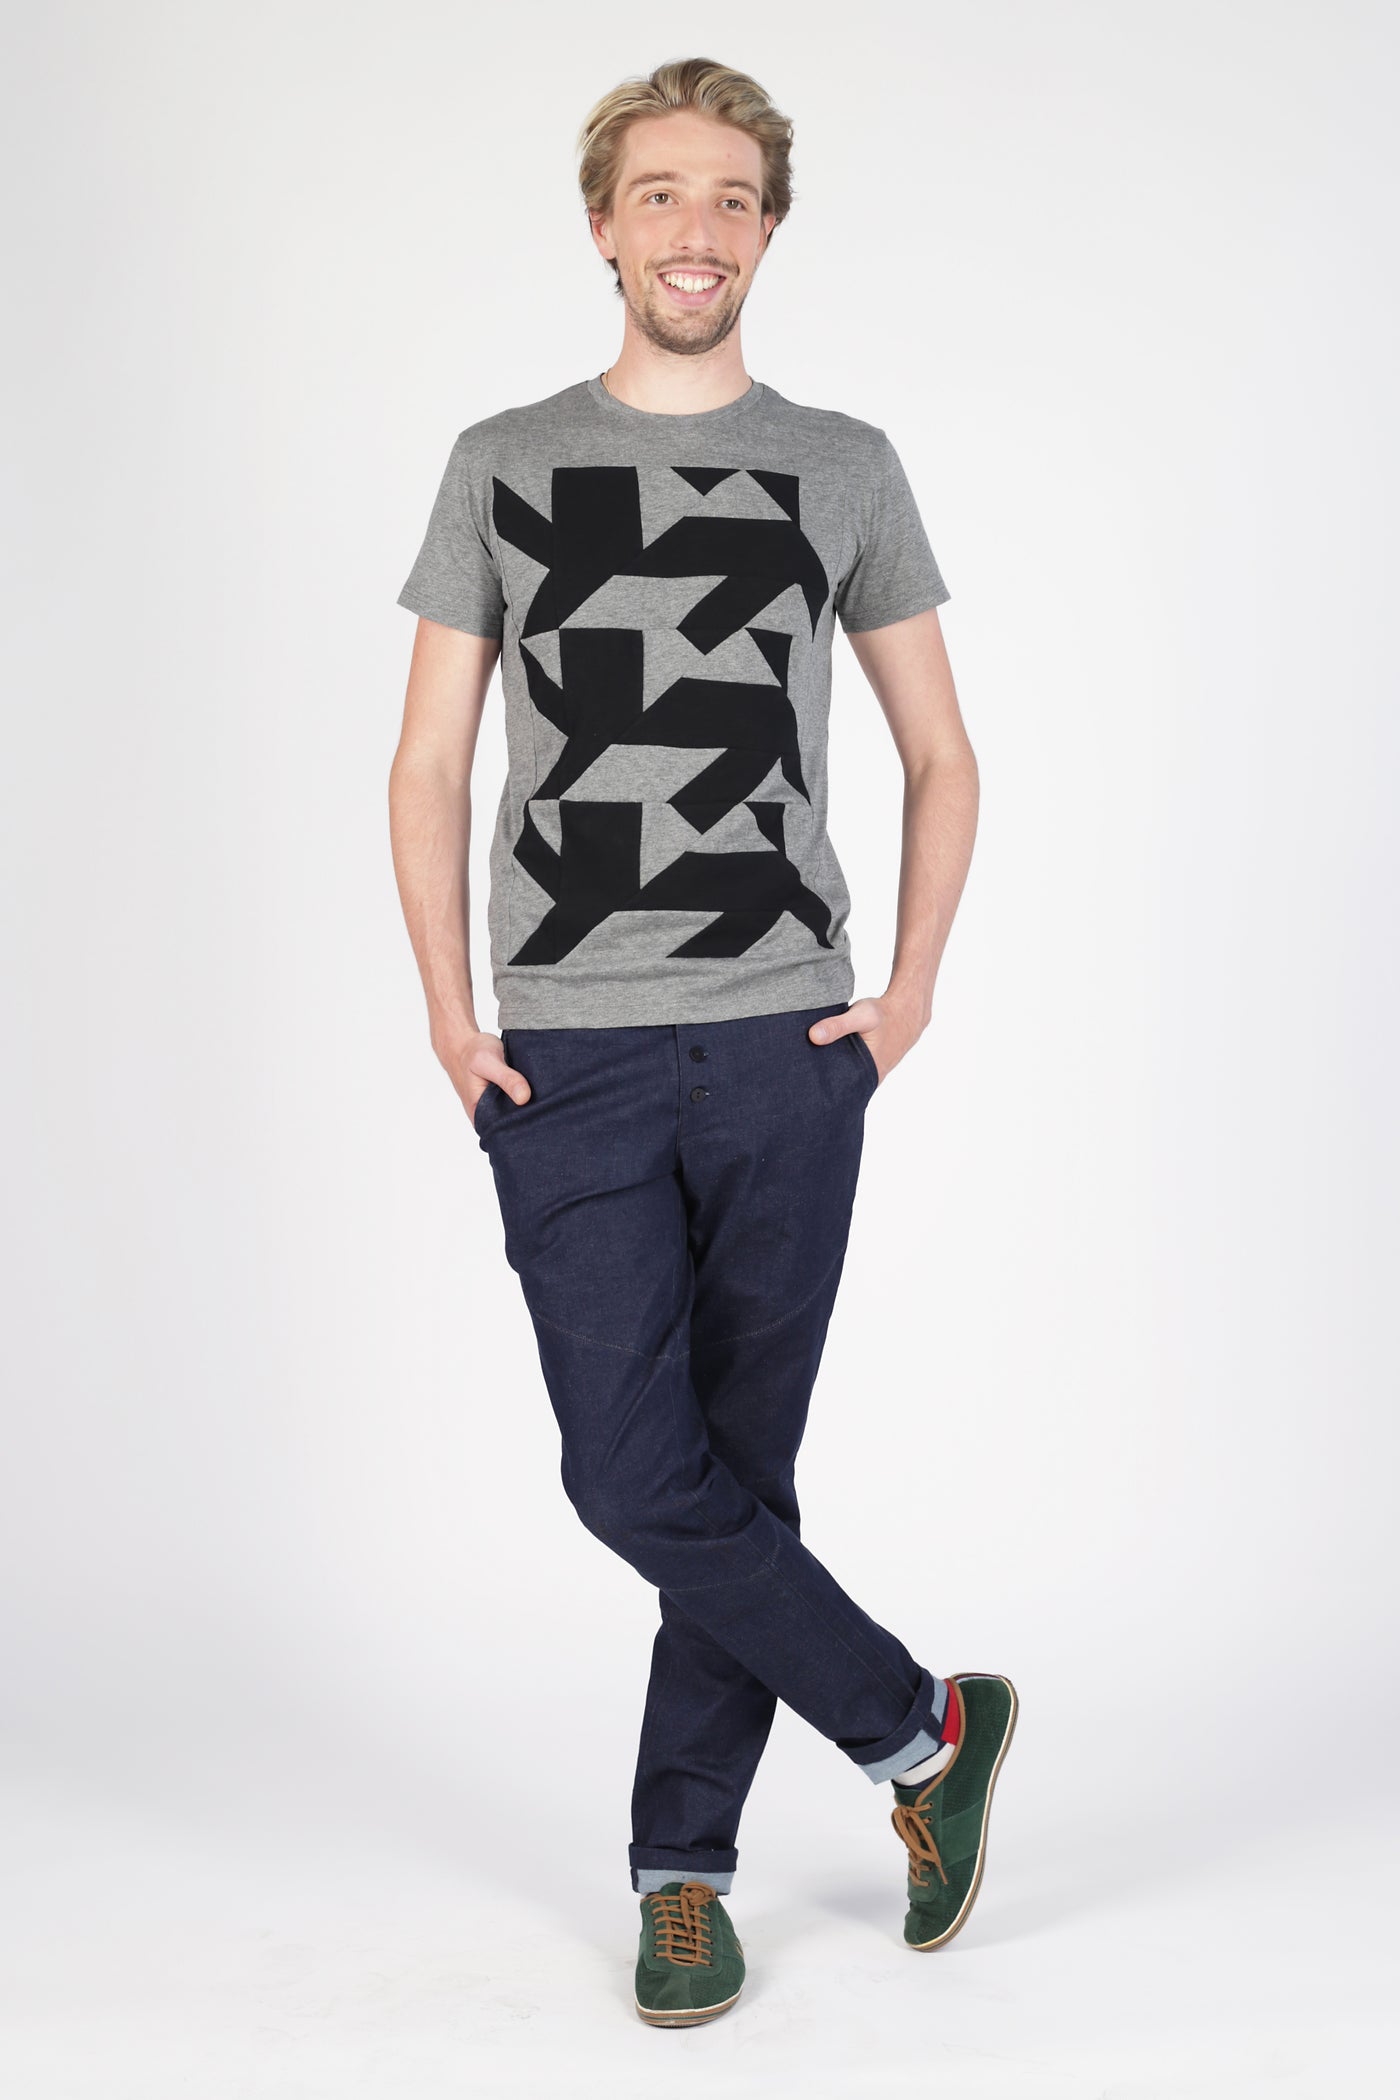 AUS/KARU lion shirt for men | Light grey, black